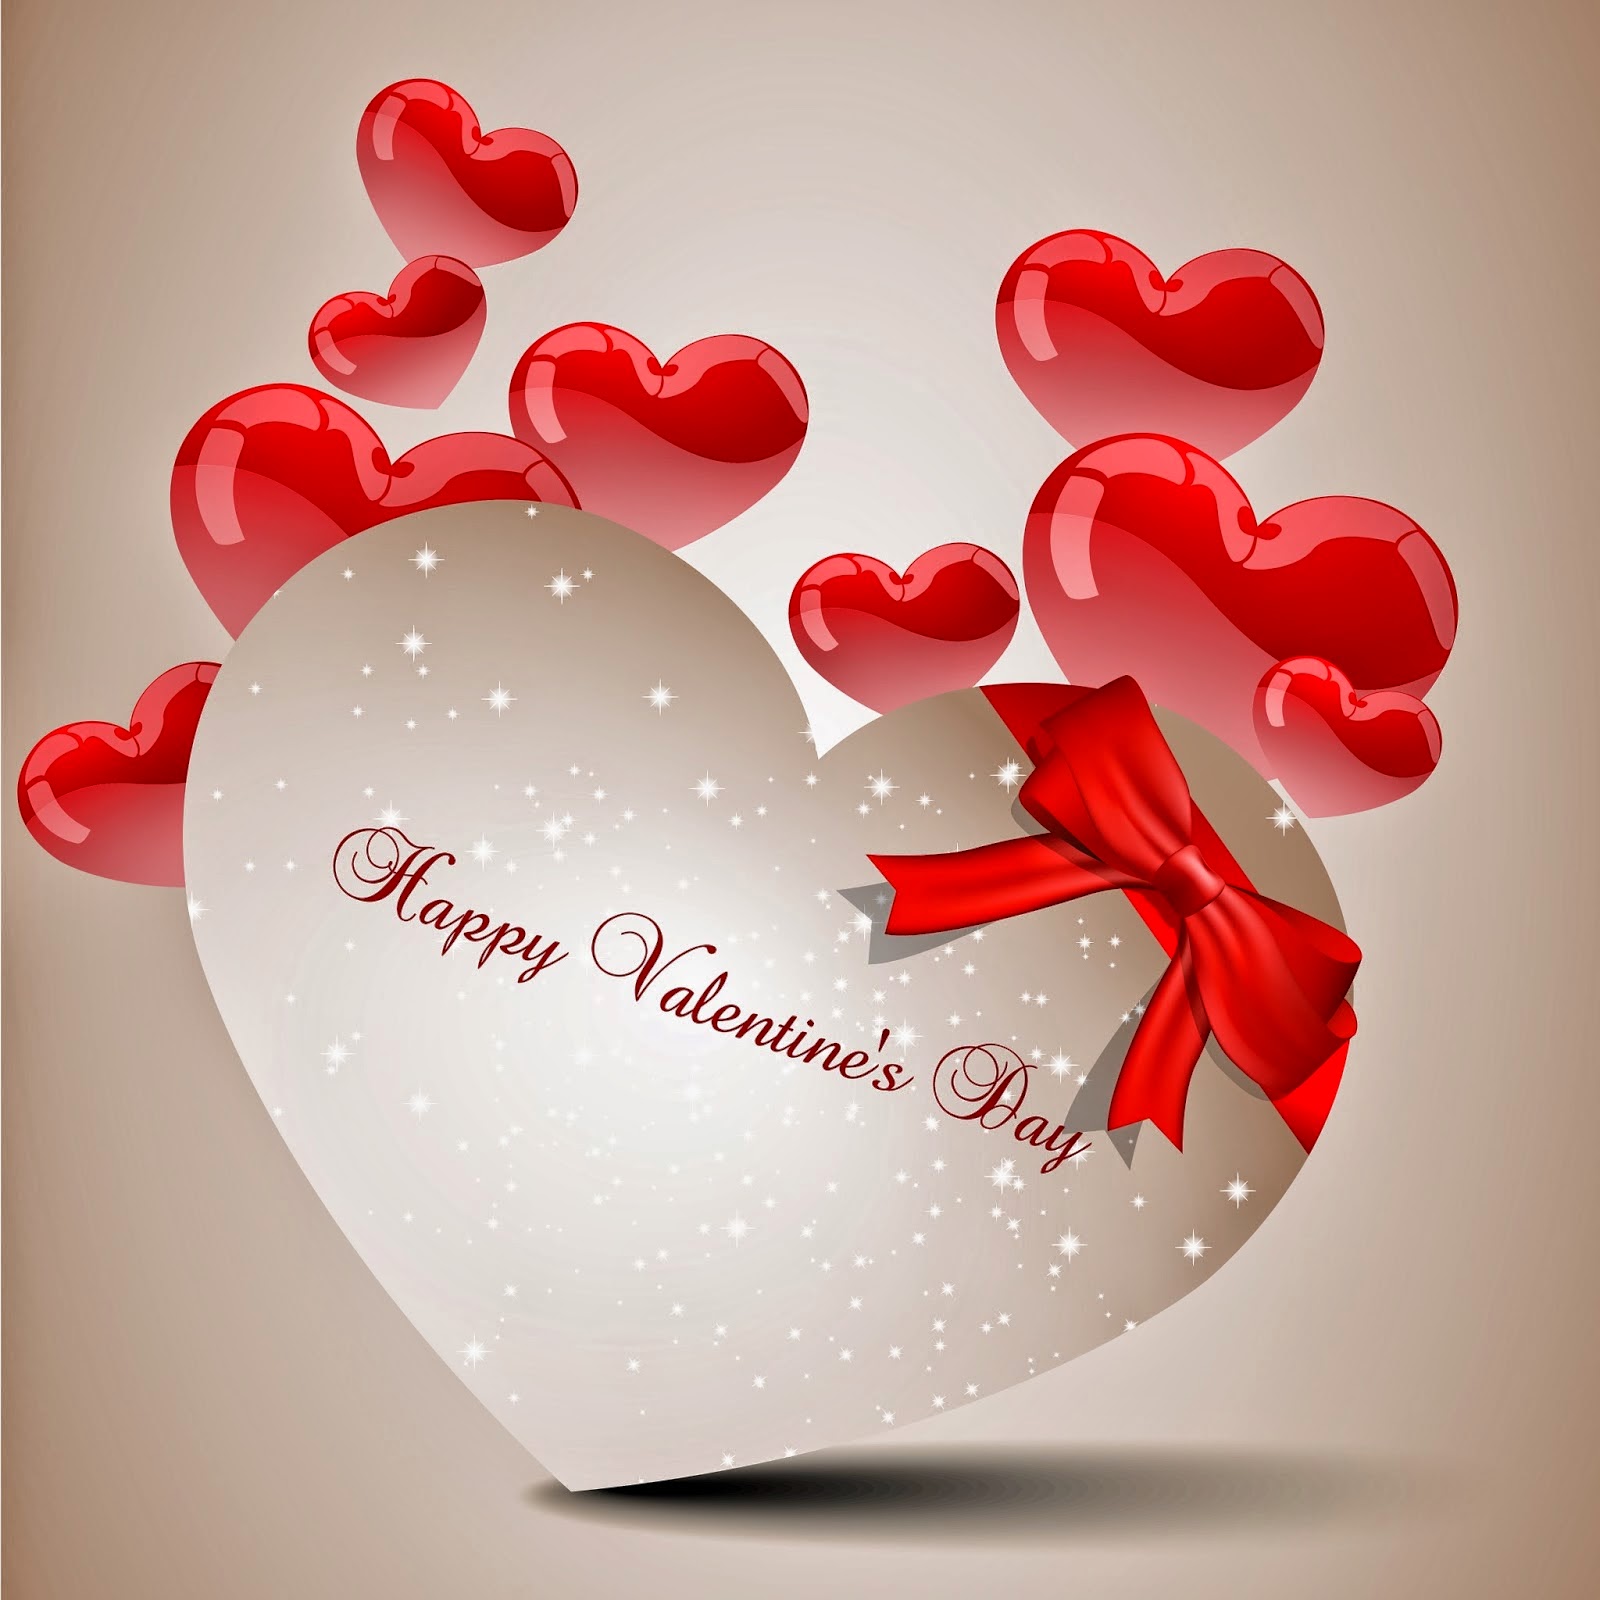 Valentine Day Wallpaper Free Download - Cute Happy Valentine Day - HD Wallpaper 